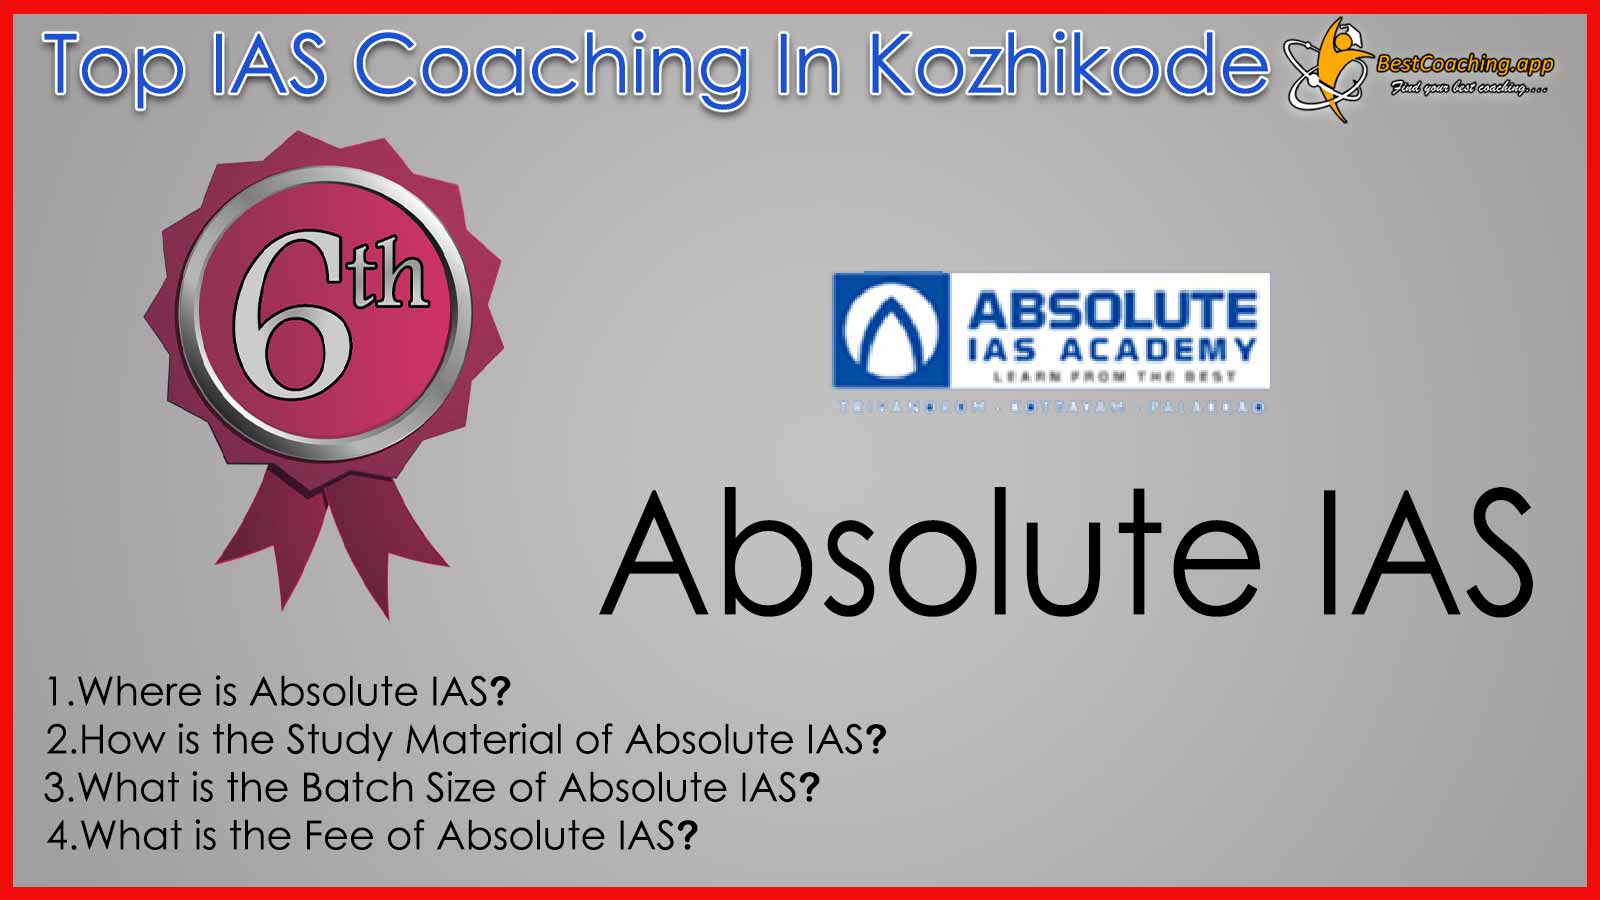 Absolute IAS Academy